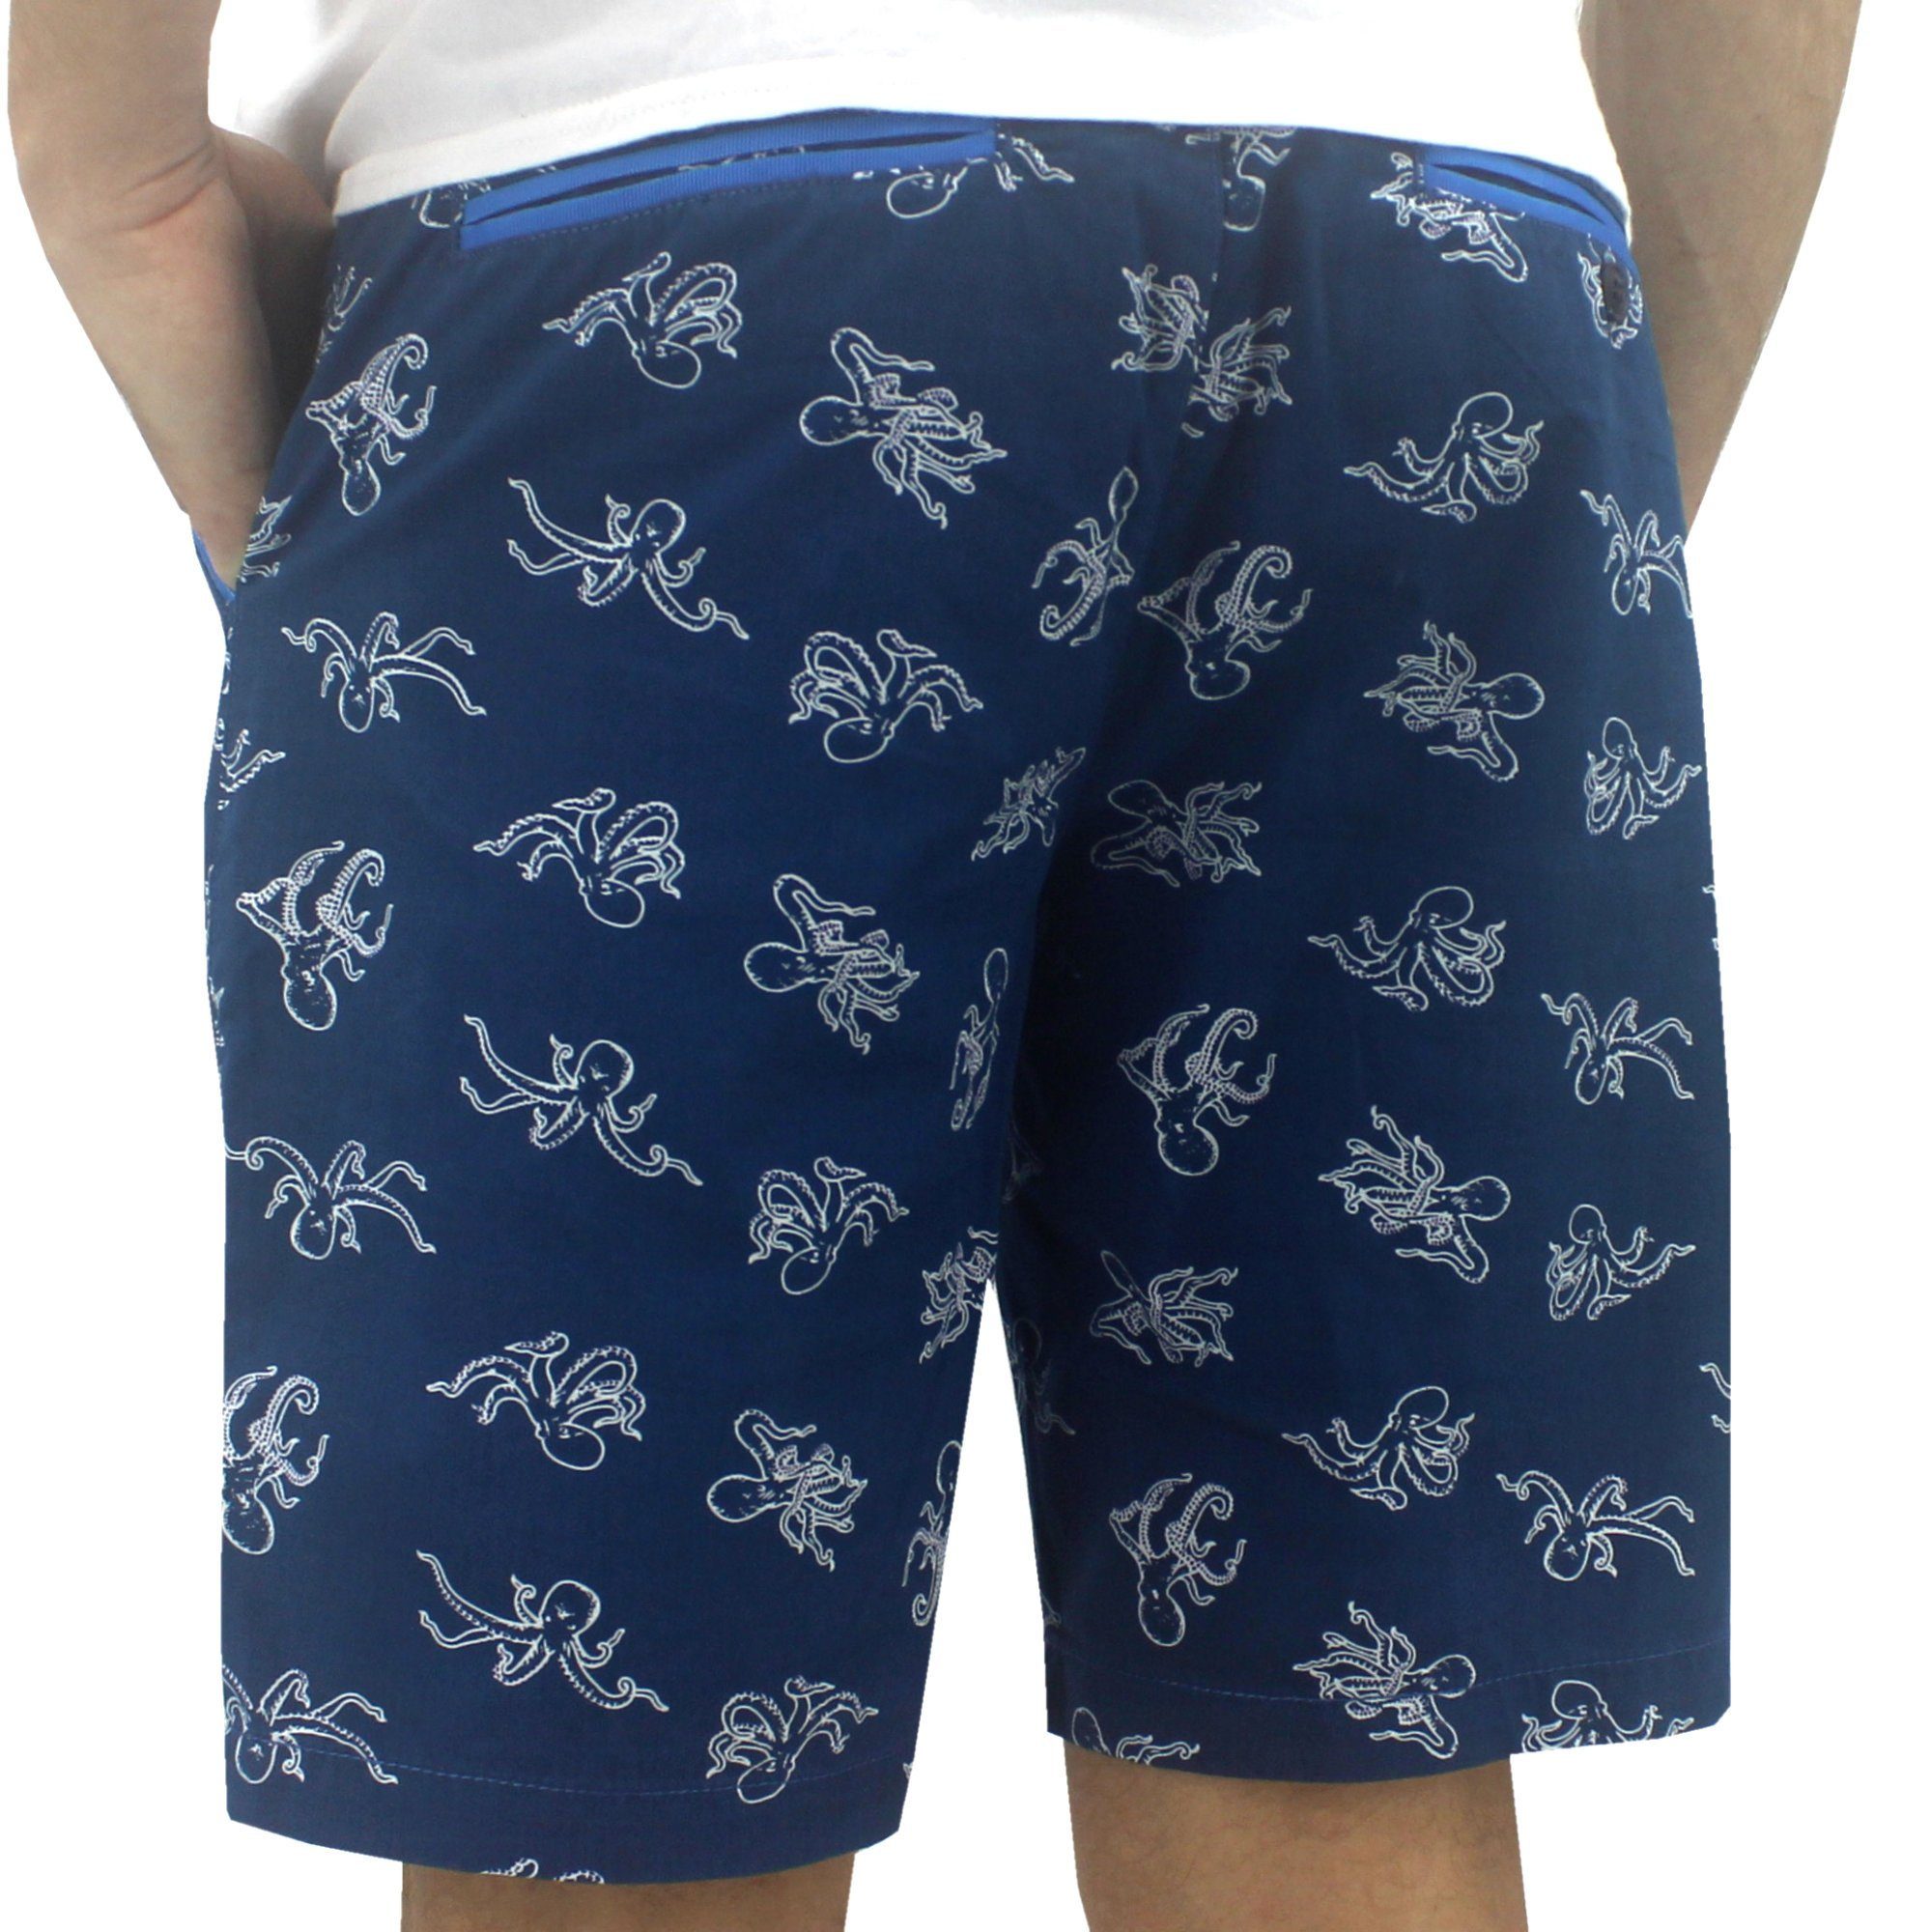 Bright Blue Octopus Patterned Golf Shorts for Men